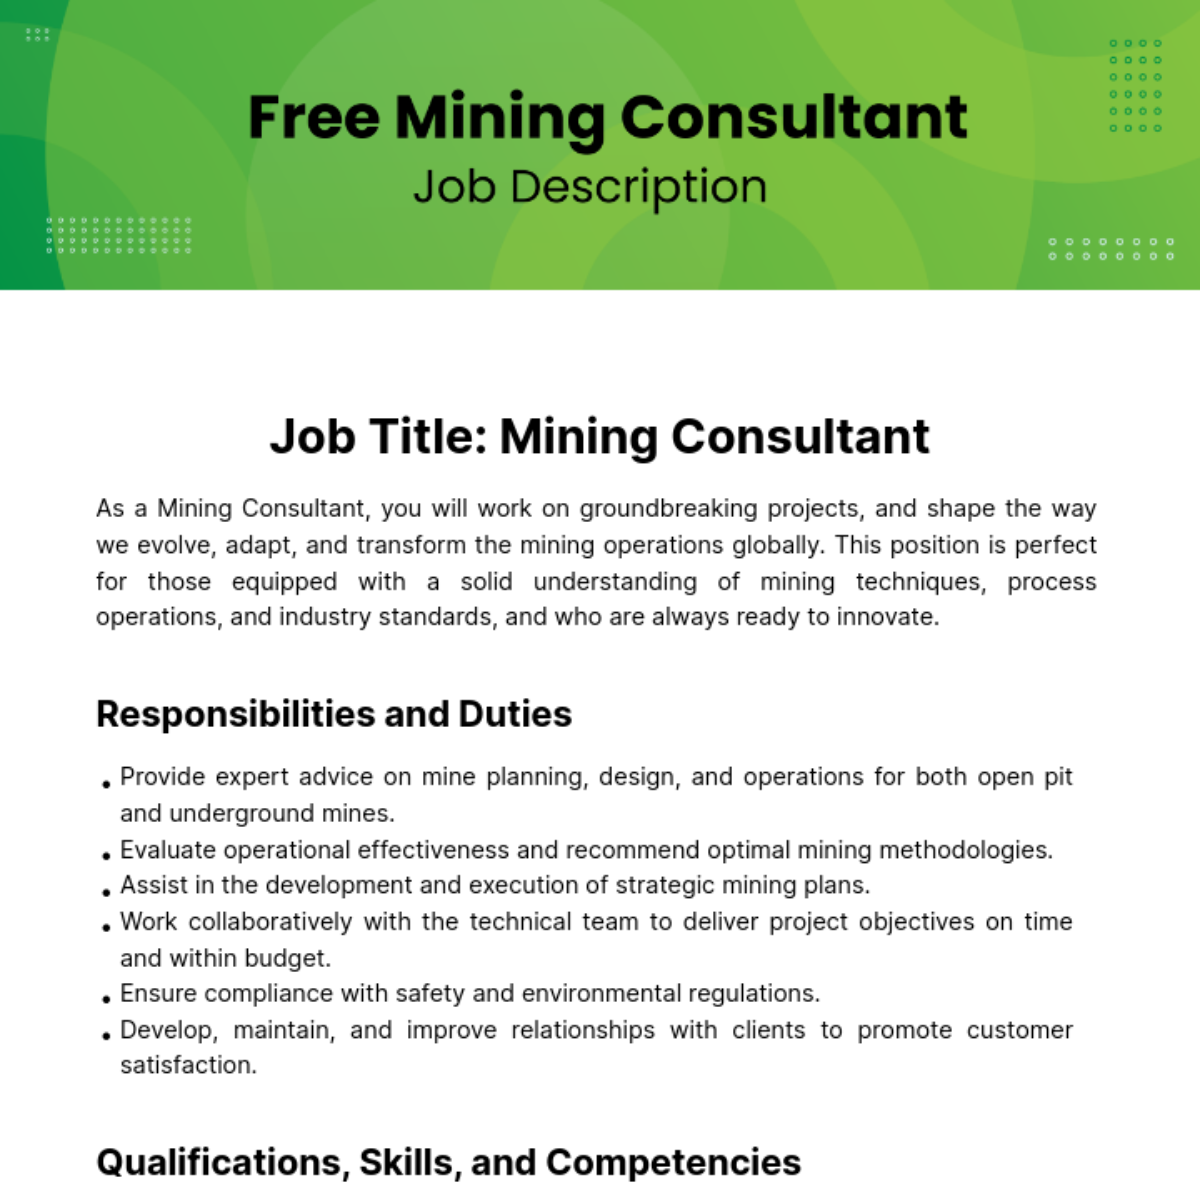 Free Mining Consultant Job Description Template